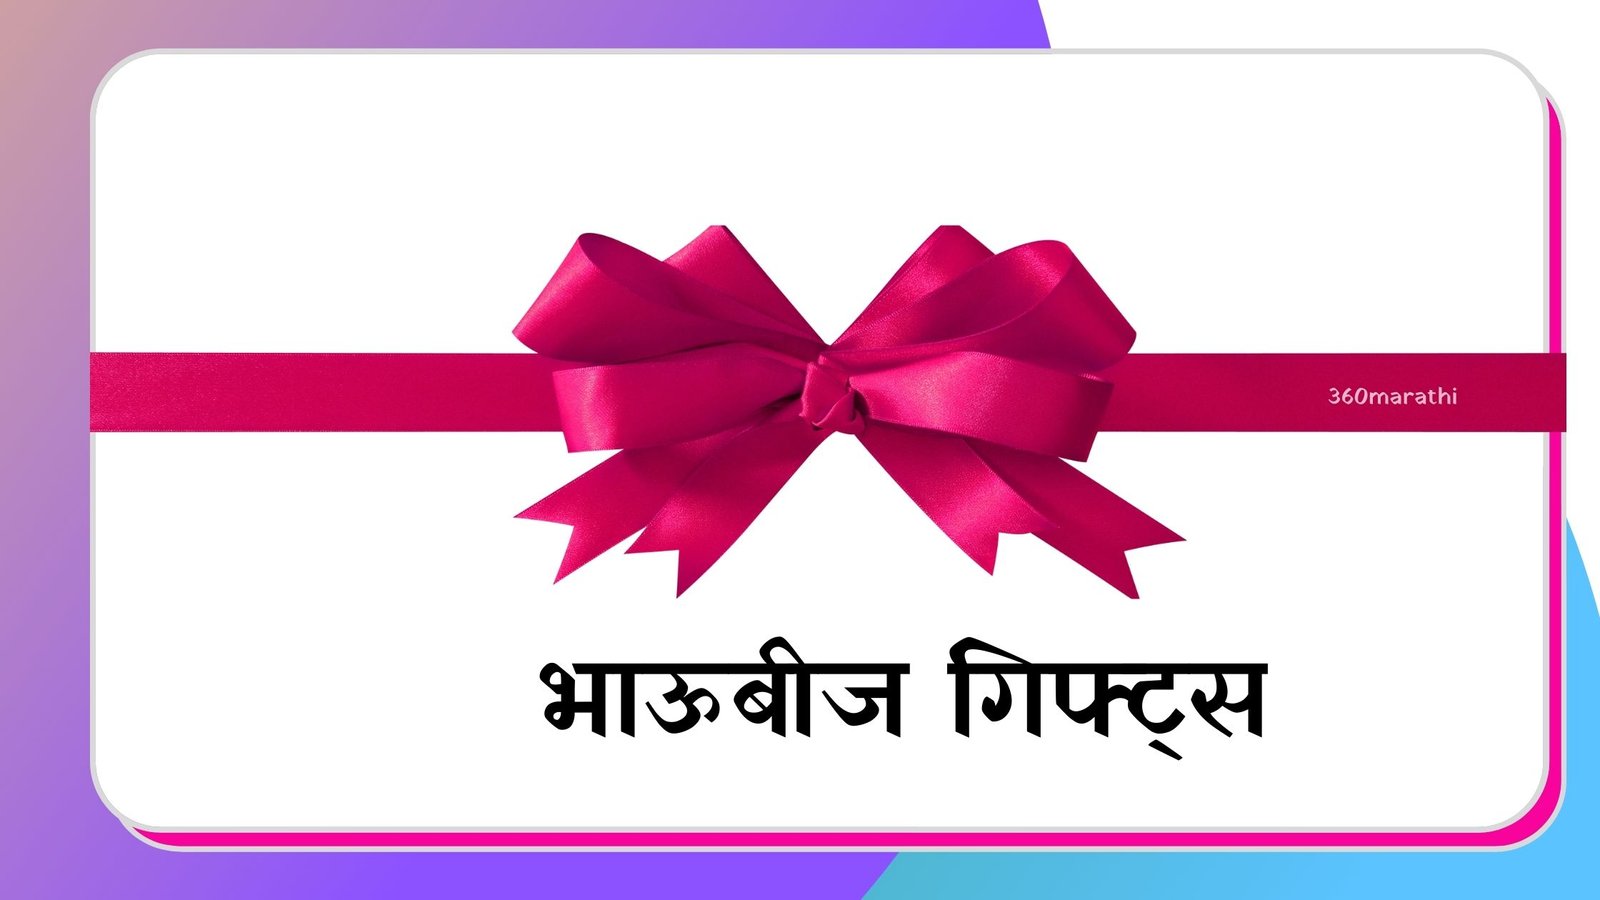 Bhaubeej Gifts in Marathi